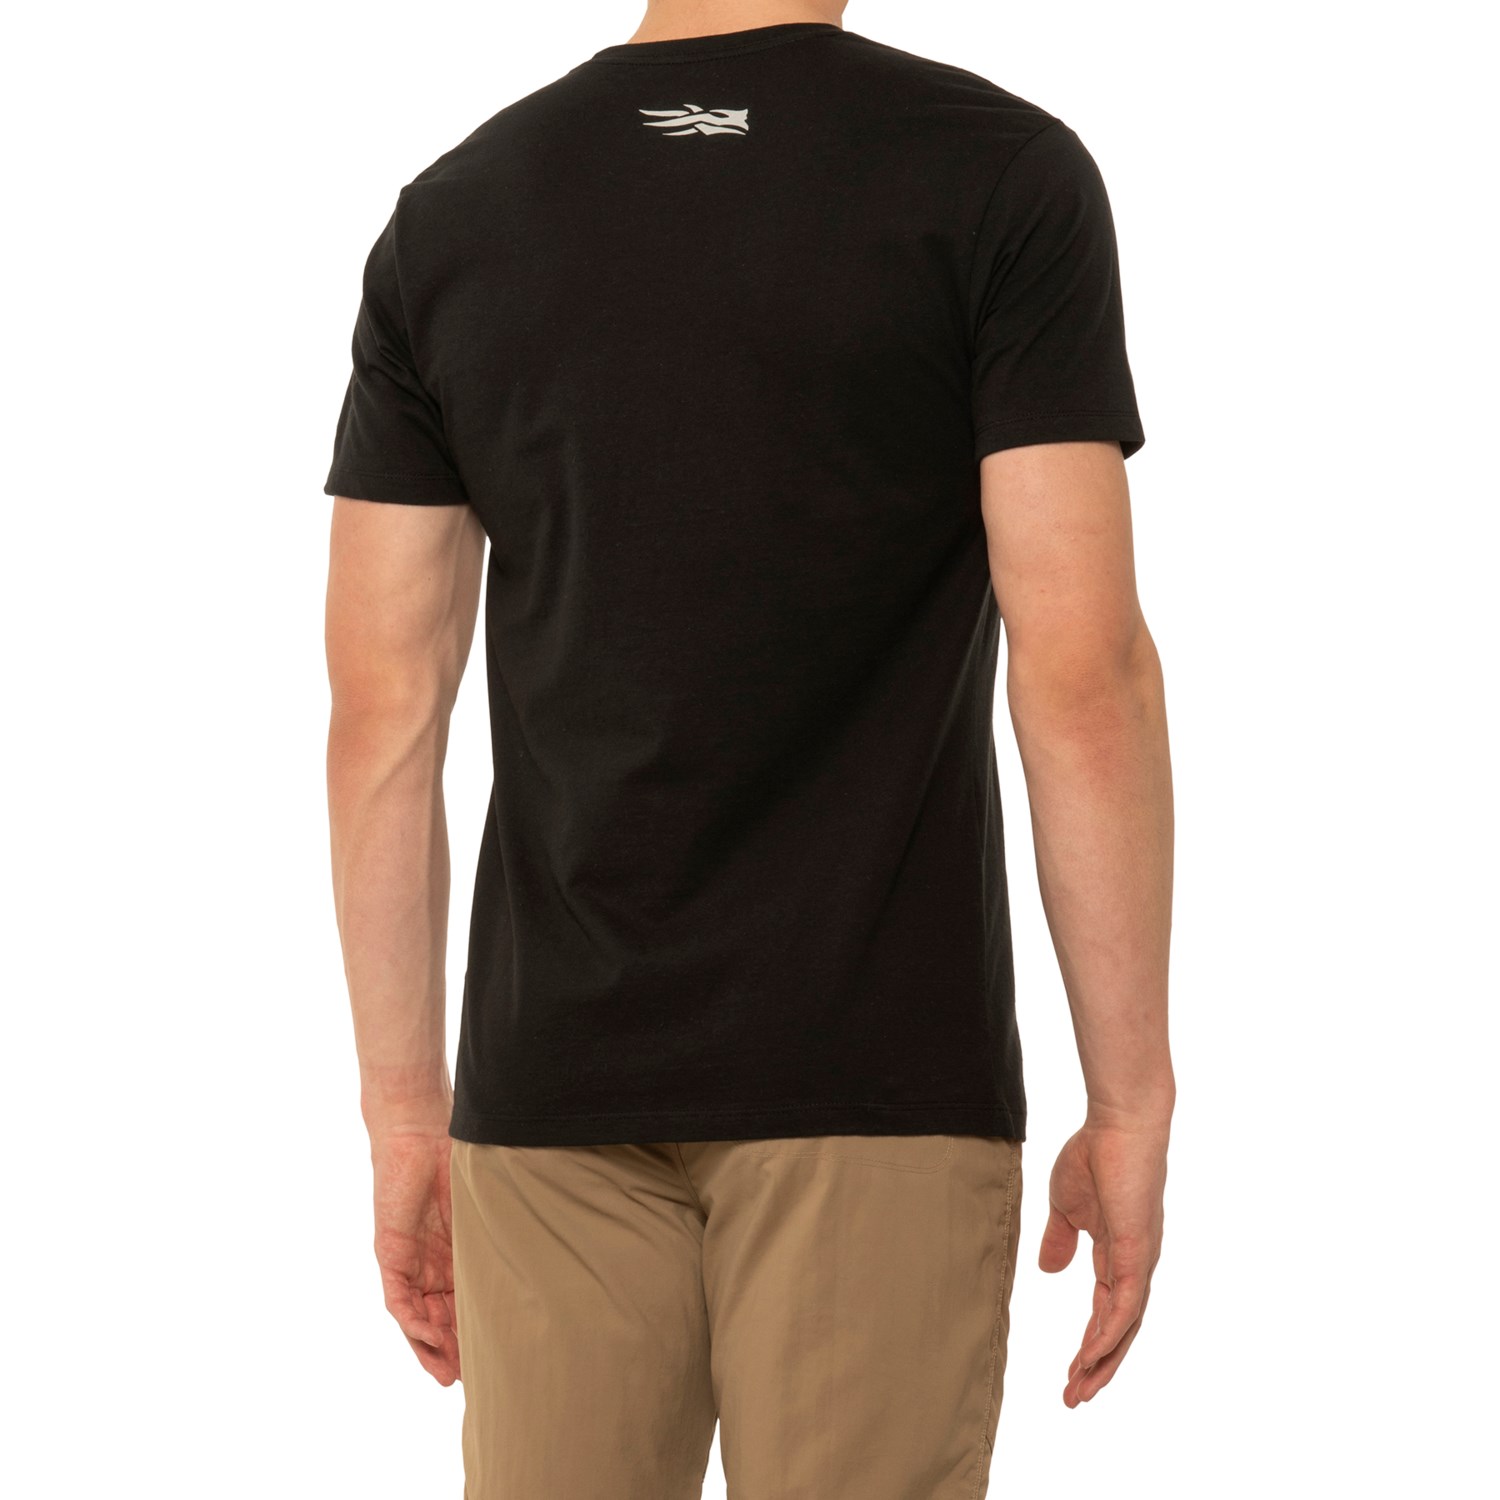 Details about   SITKA Men's Shield Short Sleeve Lead T-Shirt 20250-PB 